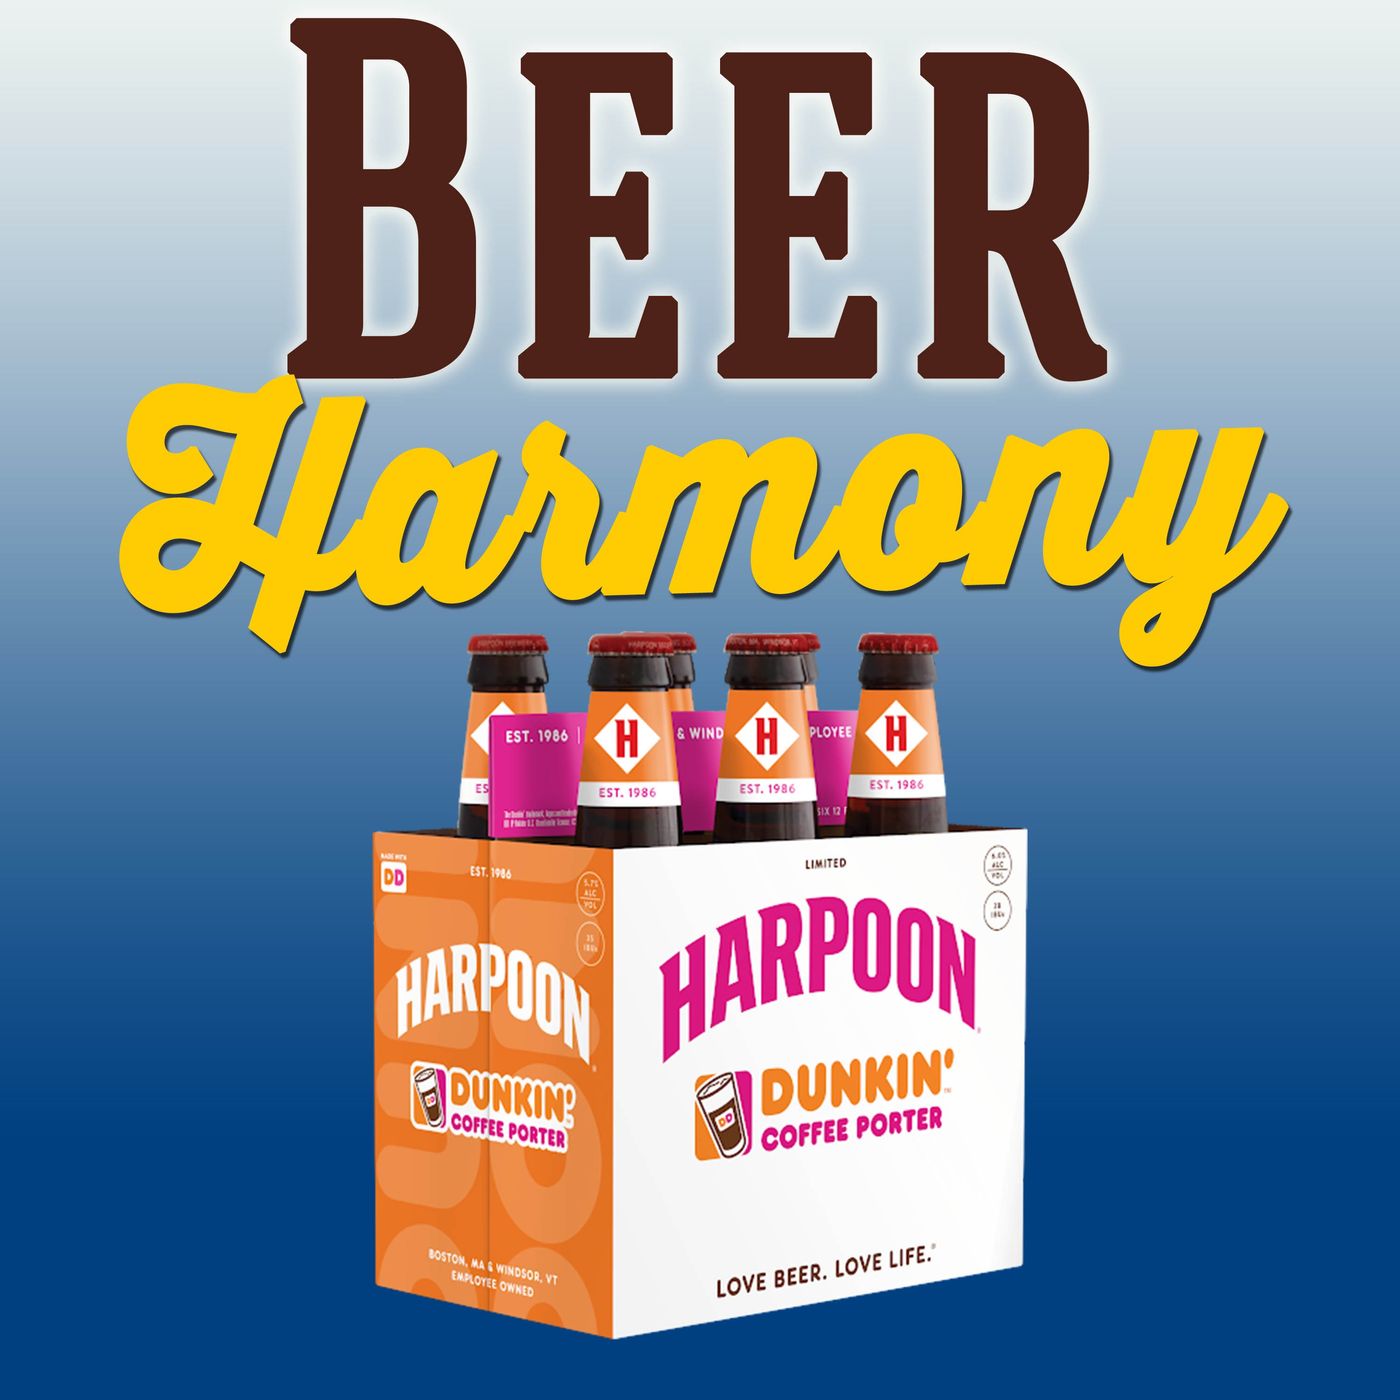 Harpoon Brewery Dunkin' Coffee Porter